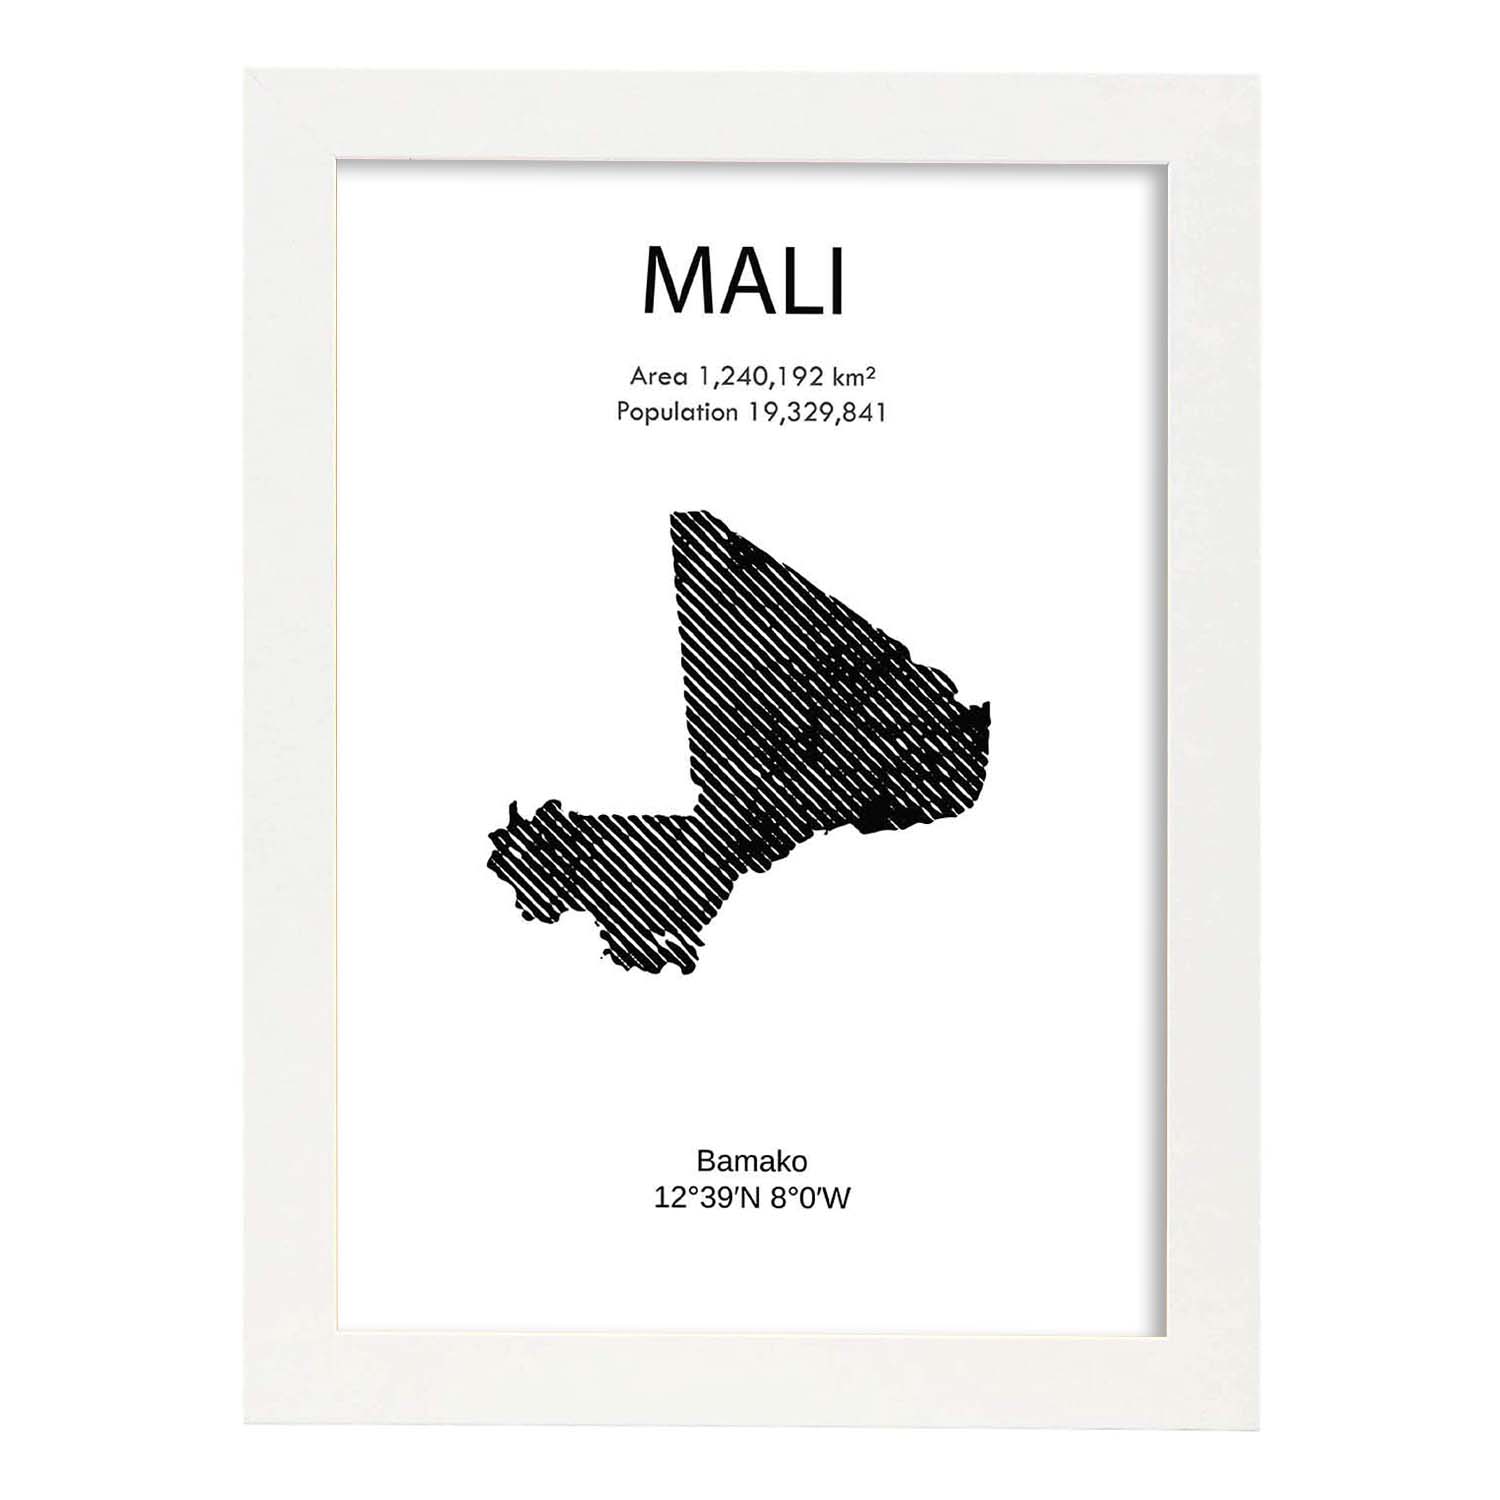 Poster de Mali. Láminas de paises y continentes del mundo.-Artwork-Nacnic-A4-Marco Blanco-Nacnic Estudio SL